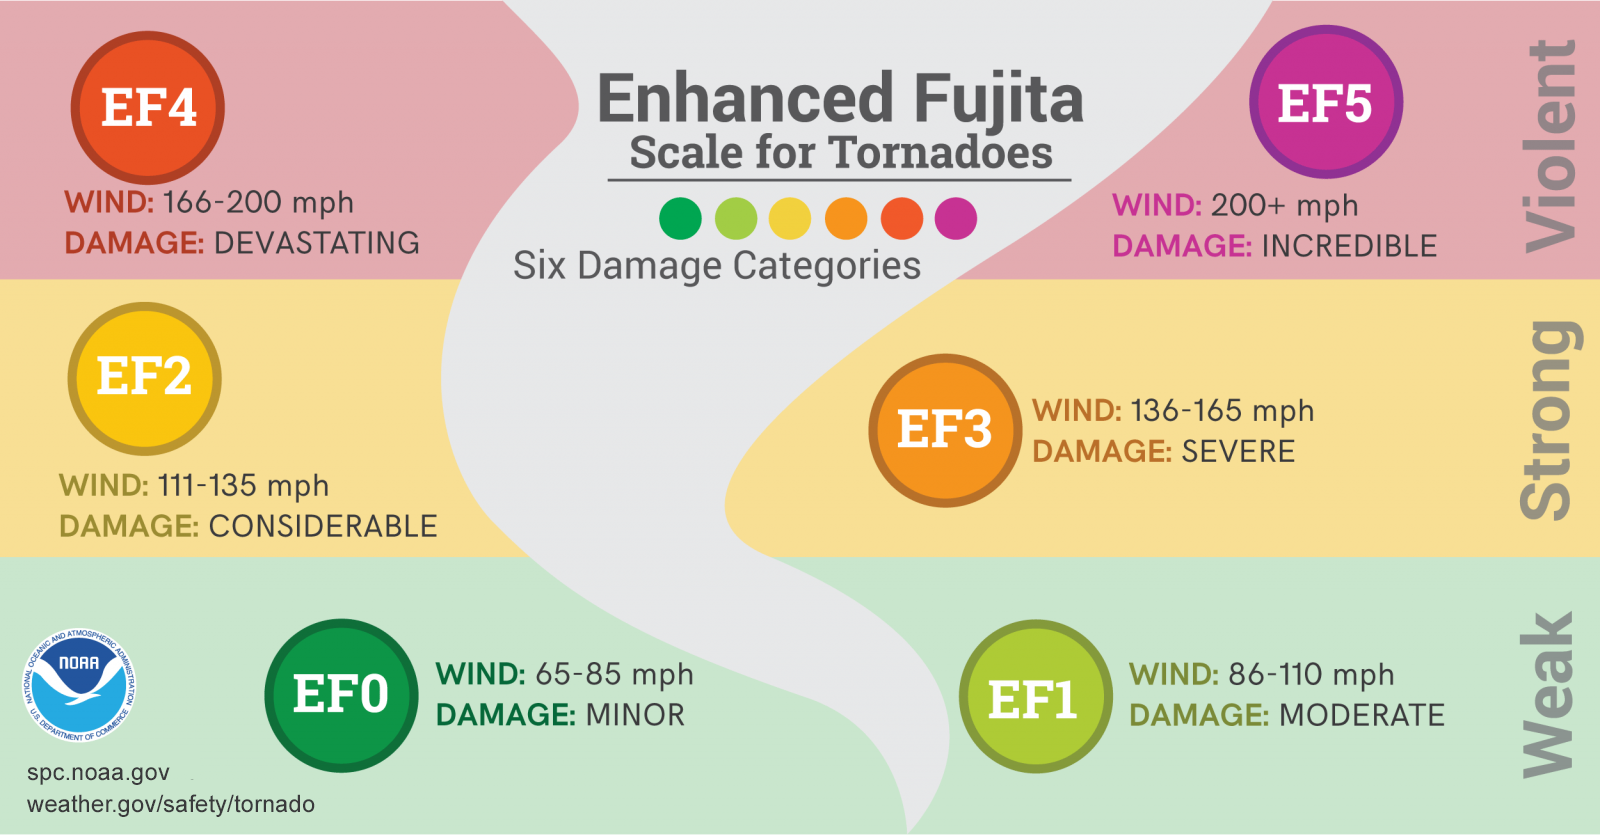 Enhanced Fujita Scale for Tornadoes - Six Damage Categories:EFO - Wind: 65-85 mph / Damage: minorEF1 - Wind: 86-110 mph / Damage: moderateEF2 - Wind: 111-135 mph / Damage: considerableEF3 - Wind: 136-165 mph / Damage: severeEF4 - Wind: 166-200 mph / Damage: devastatingEF5 - Wind: 200+ mph / Damage: incrediblespc.noaa.govweather.gov/tornado